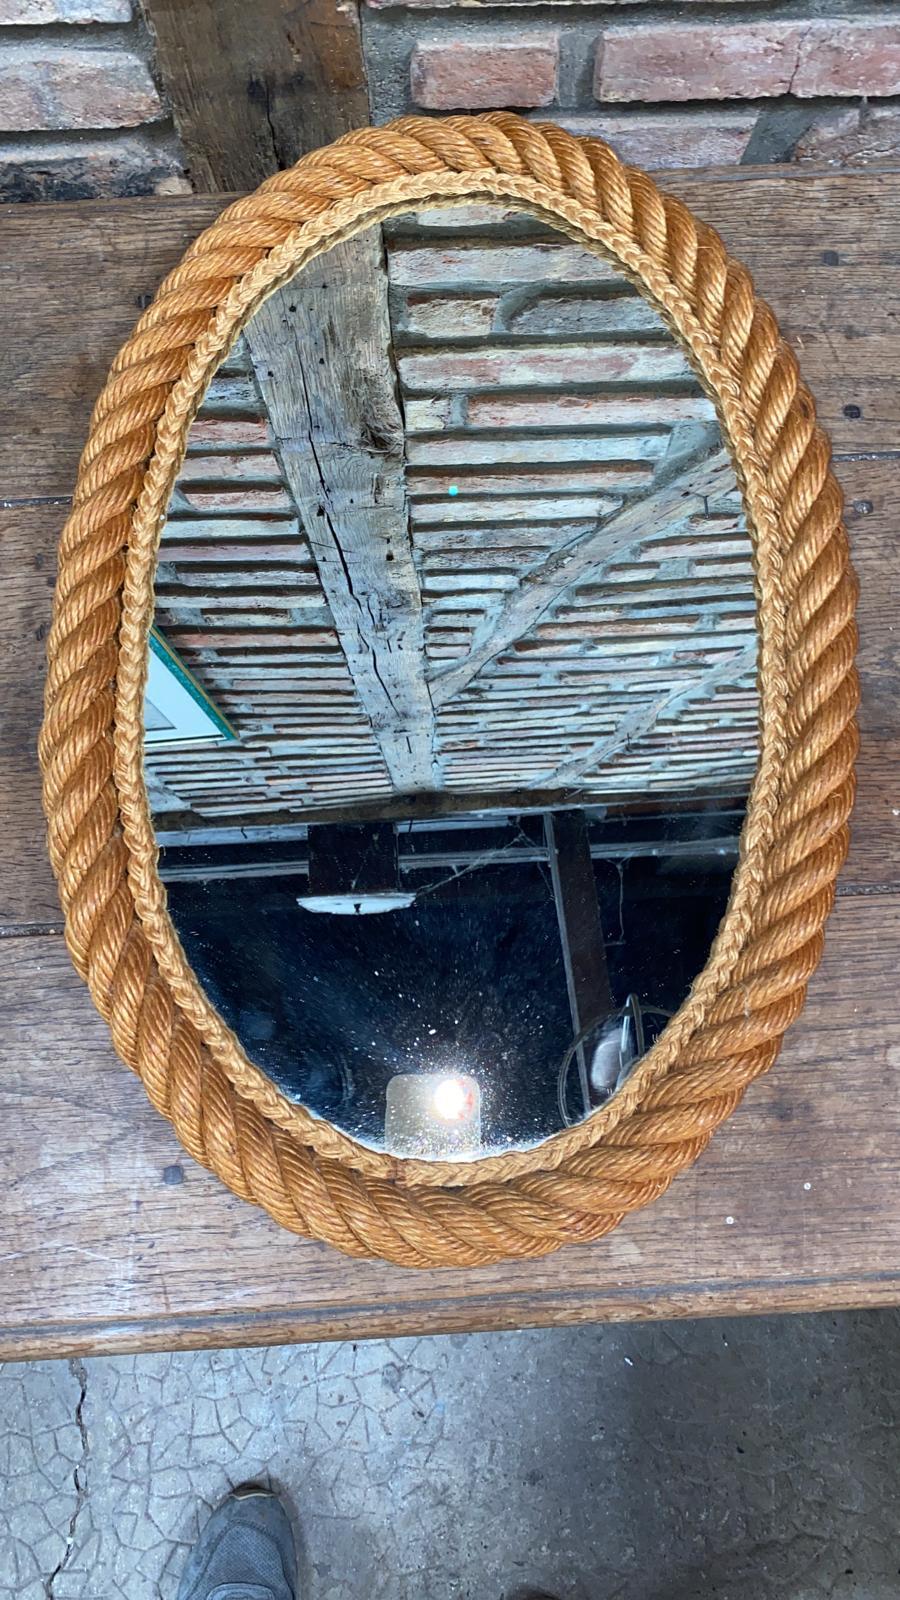 nautical rope mirror